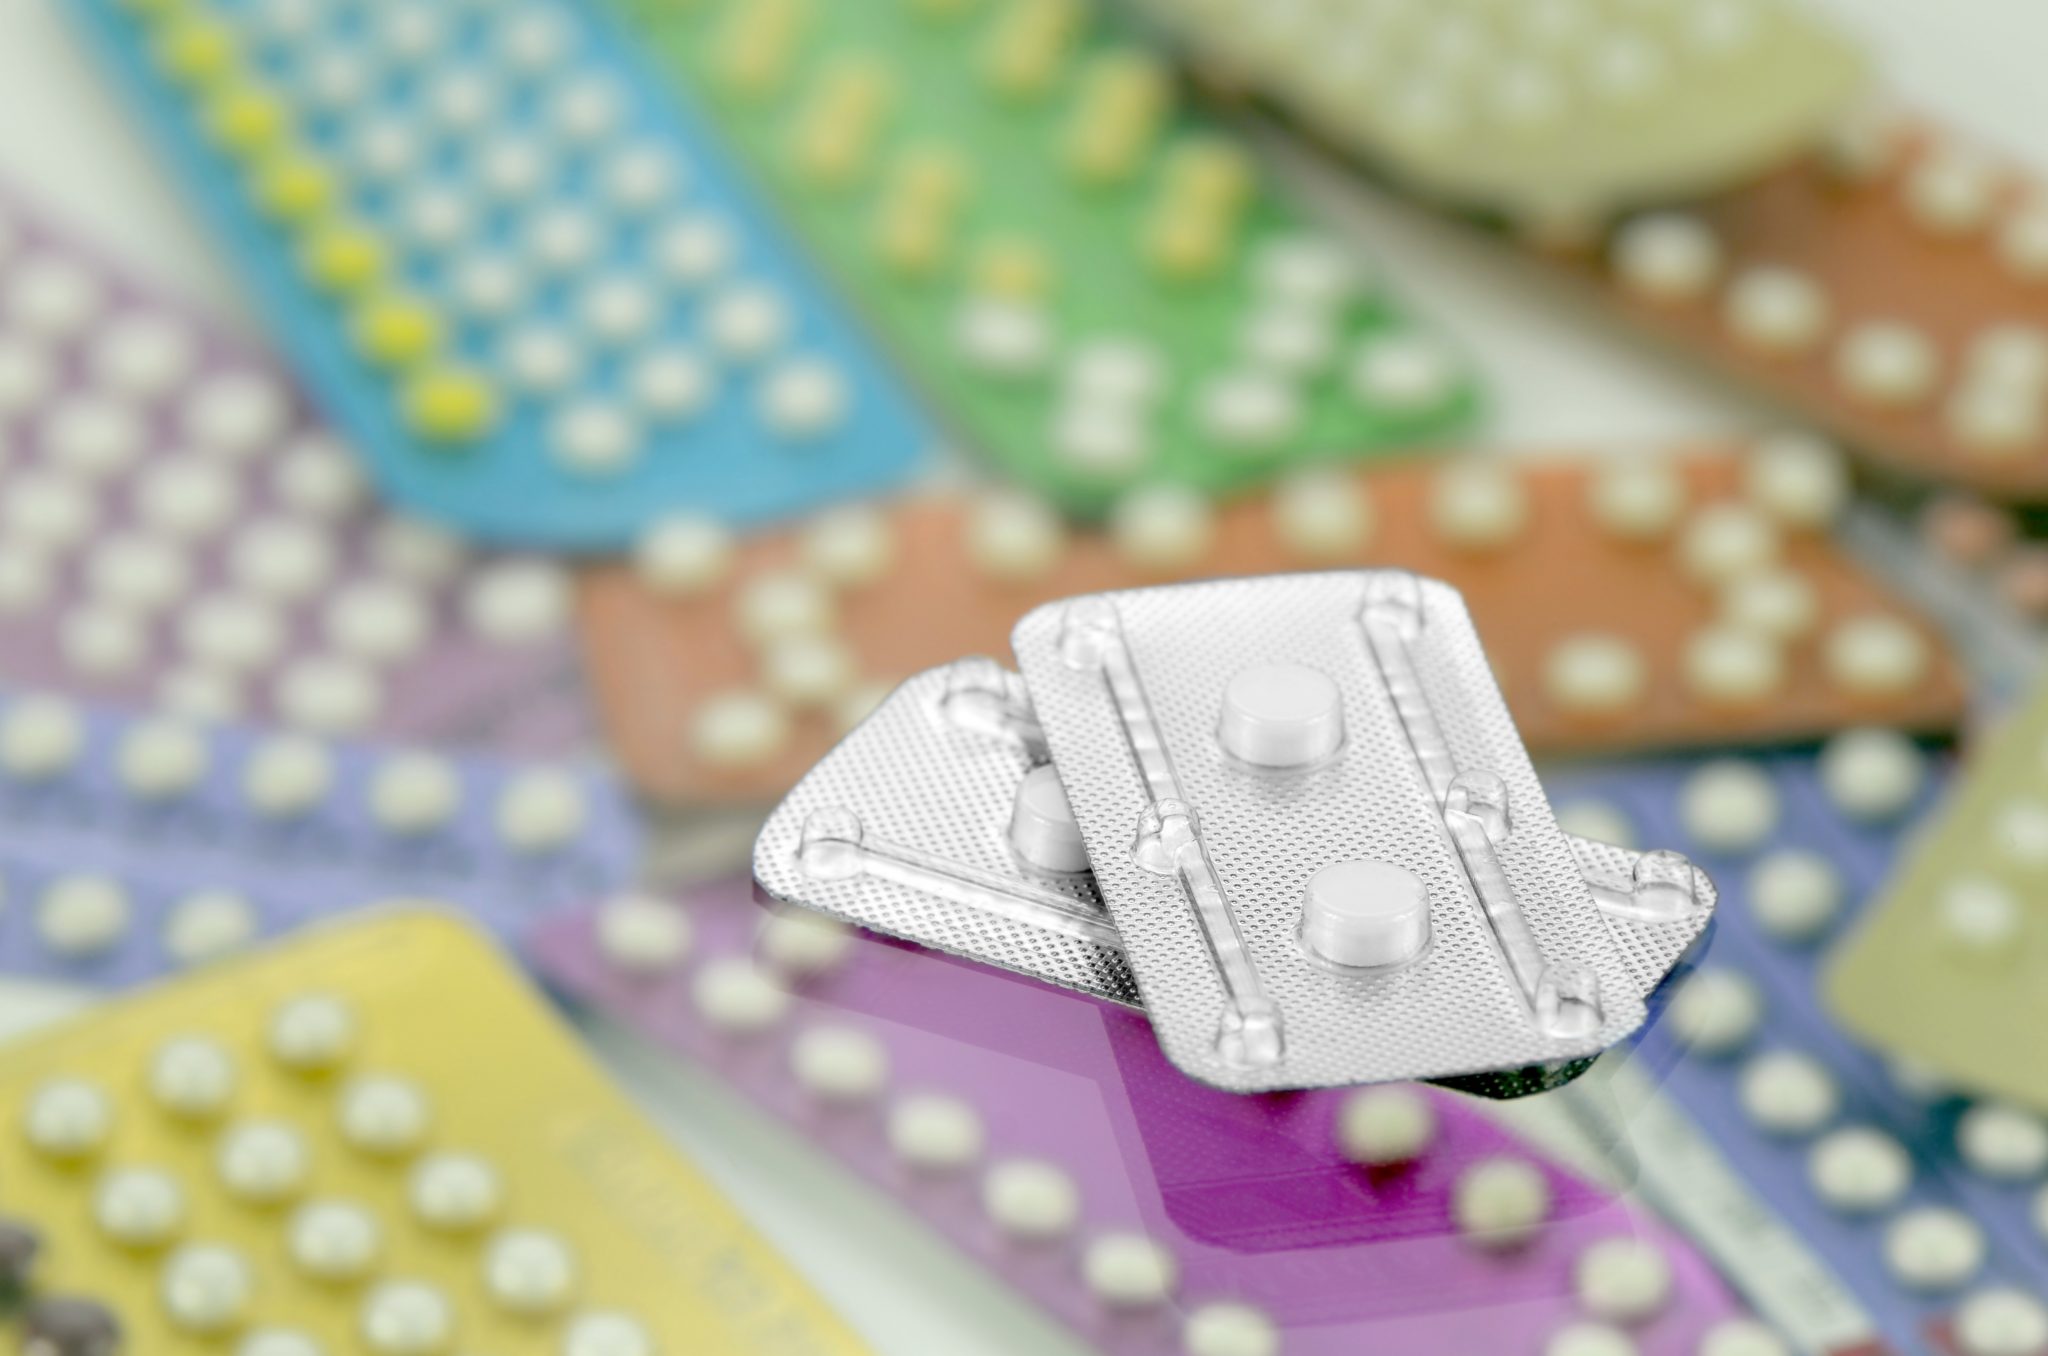 Emergency Contraceptive Pill Plan B